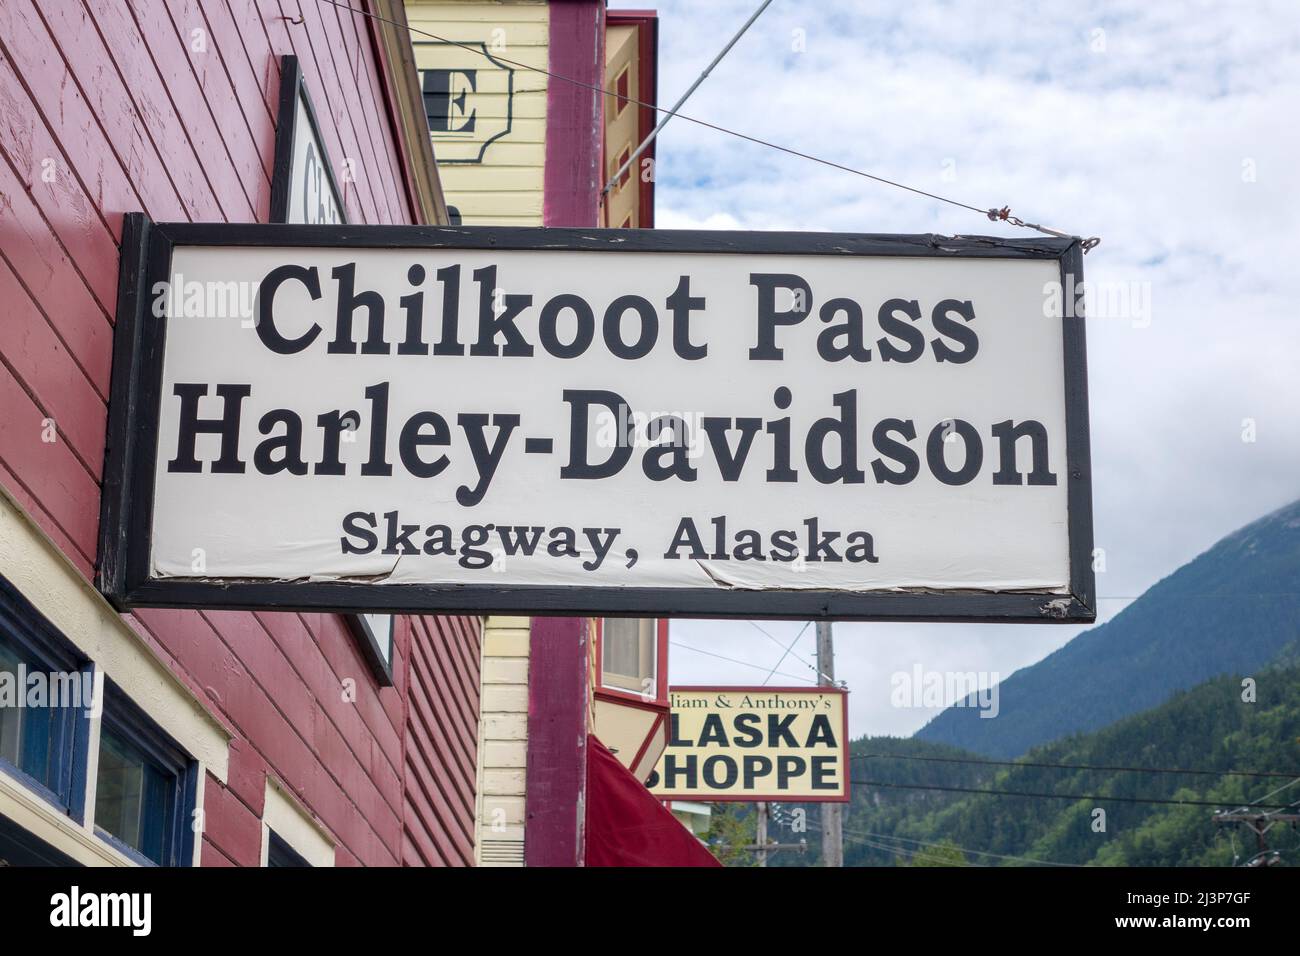 Sign Outside A Harley Davidson Dealer In Skagway Alaska Chilkoot Pass Harley Davidson Motorcycle Dealership Stock Photo